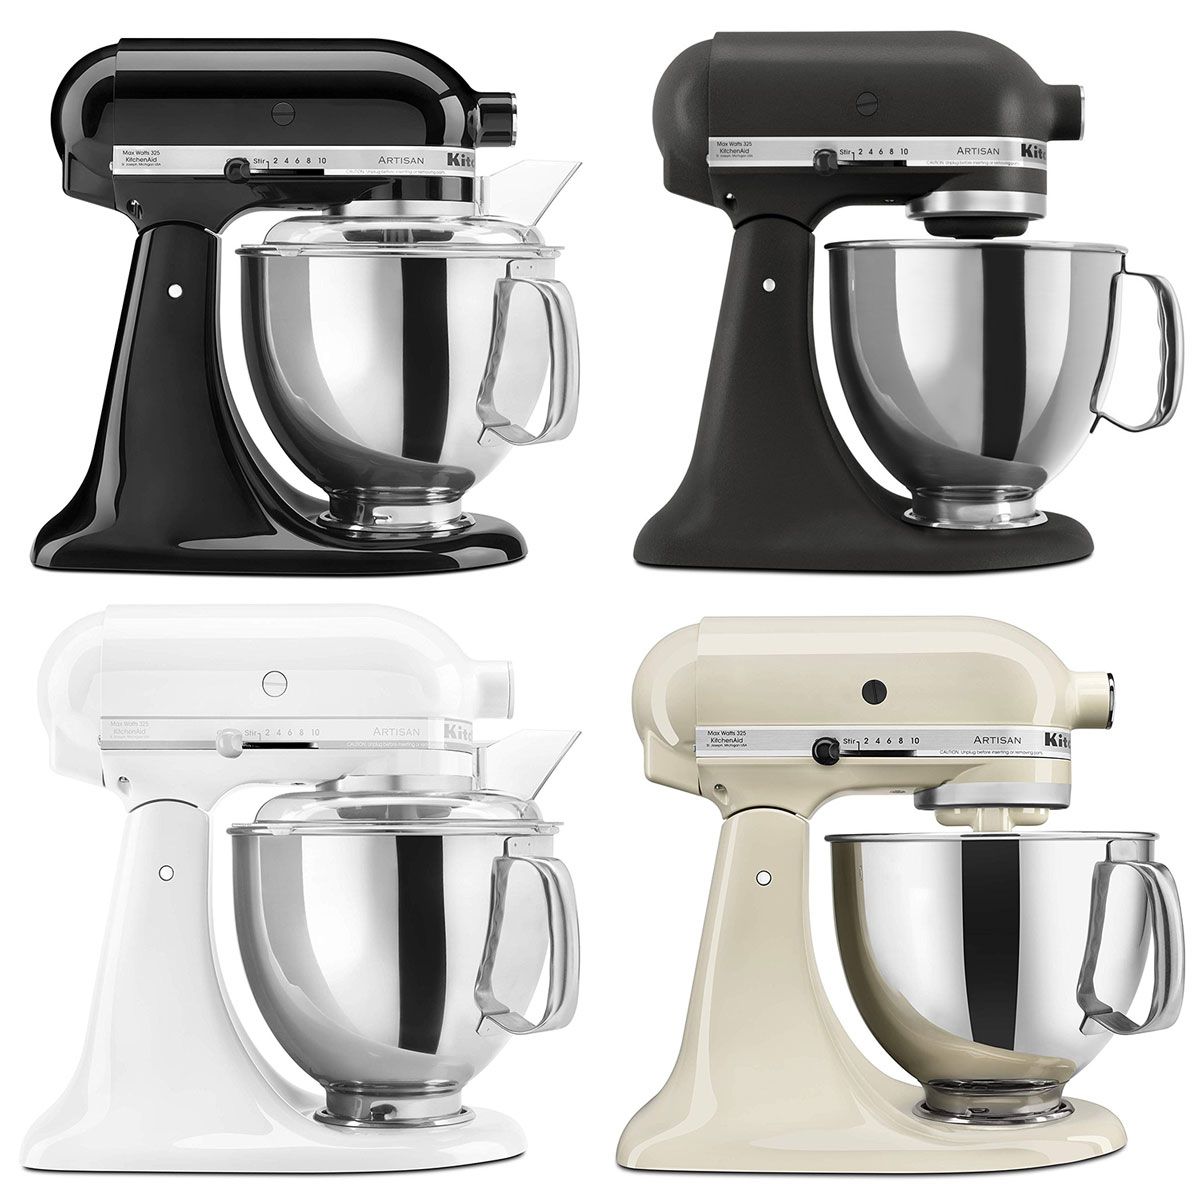 kitchenaid mixers in black and white